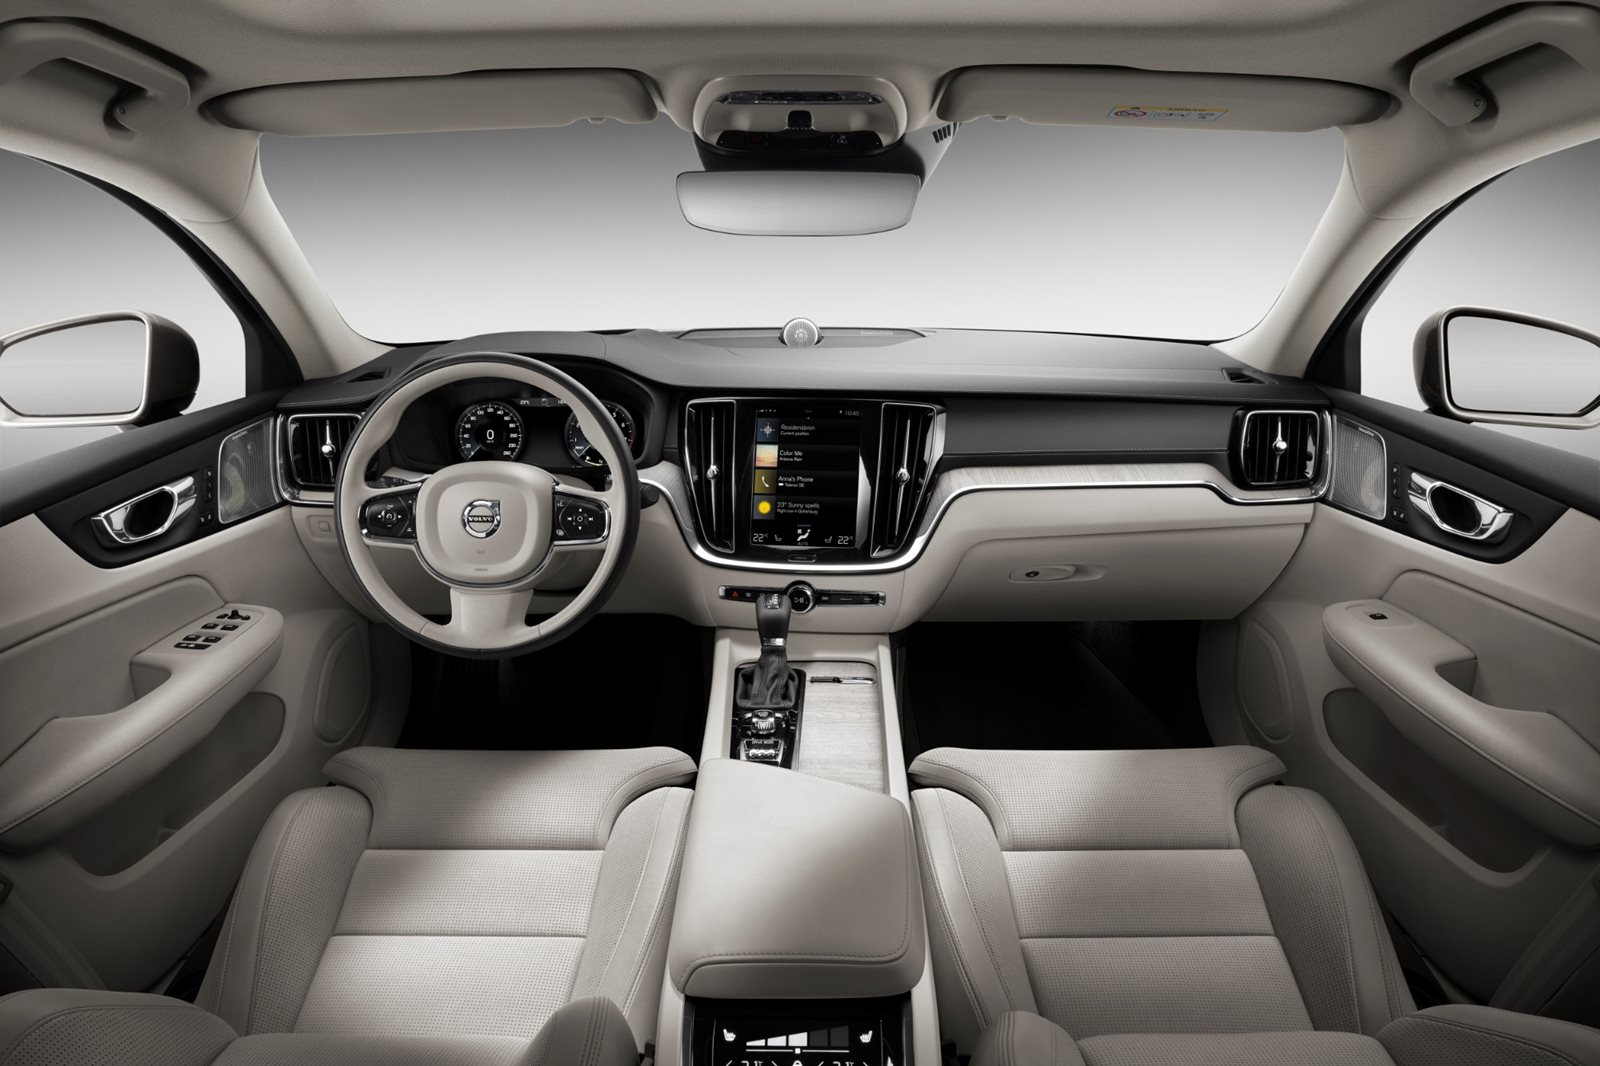 Volvo V60 interior - Cockpit